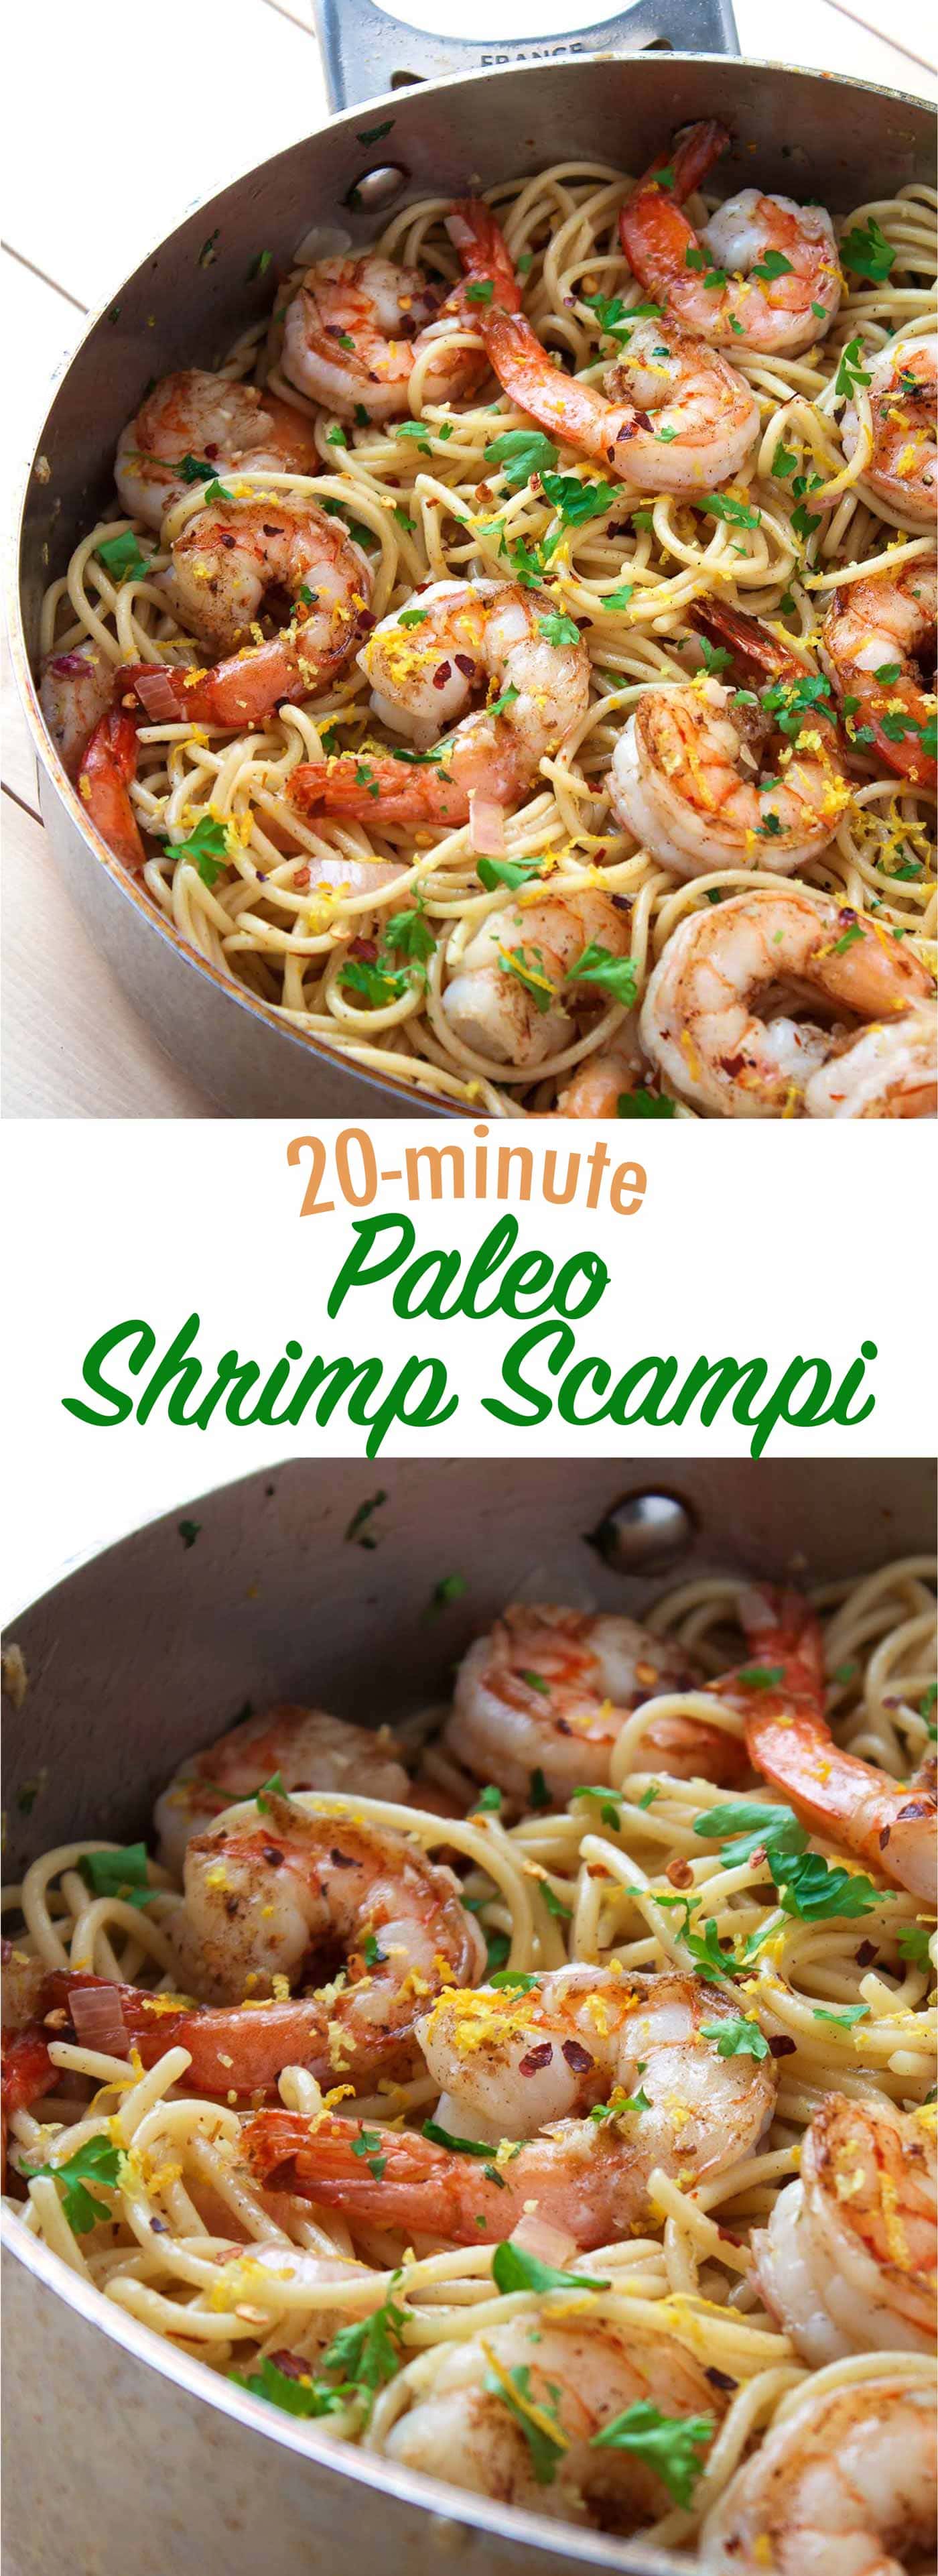 20-Minute Paleo Shrimp Scampi | Kit's Coastal | #kitscoastal #coastalpaleo #paleo #glutenfree #dairyfree #shrimp #shrimpscampi